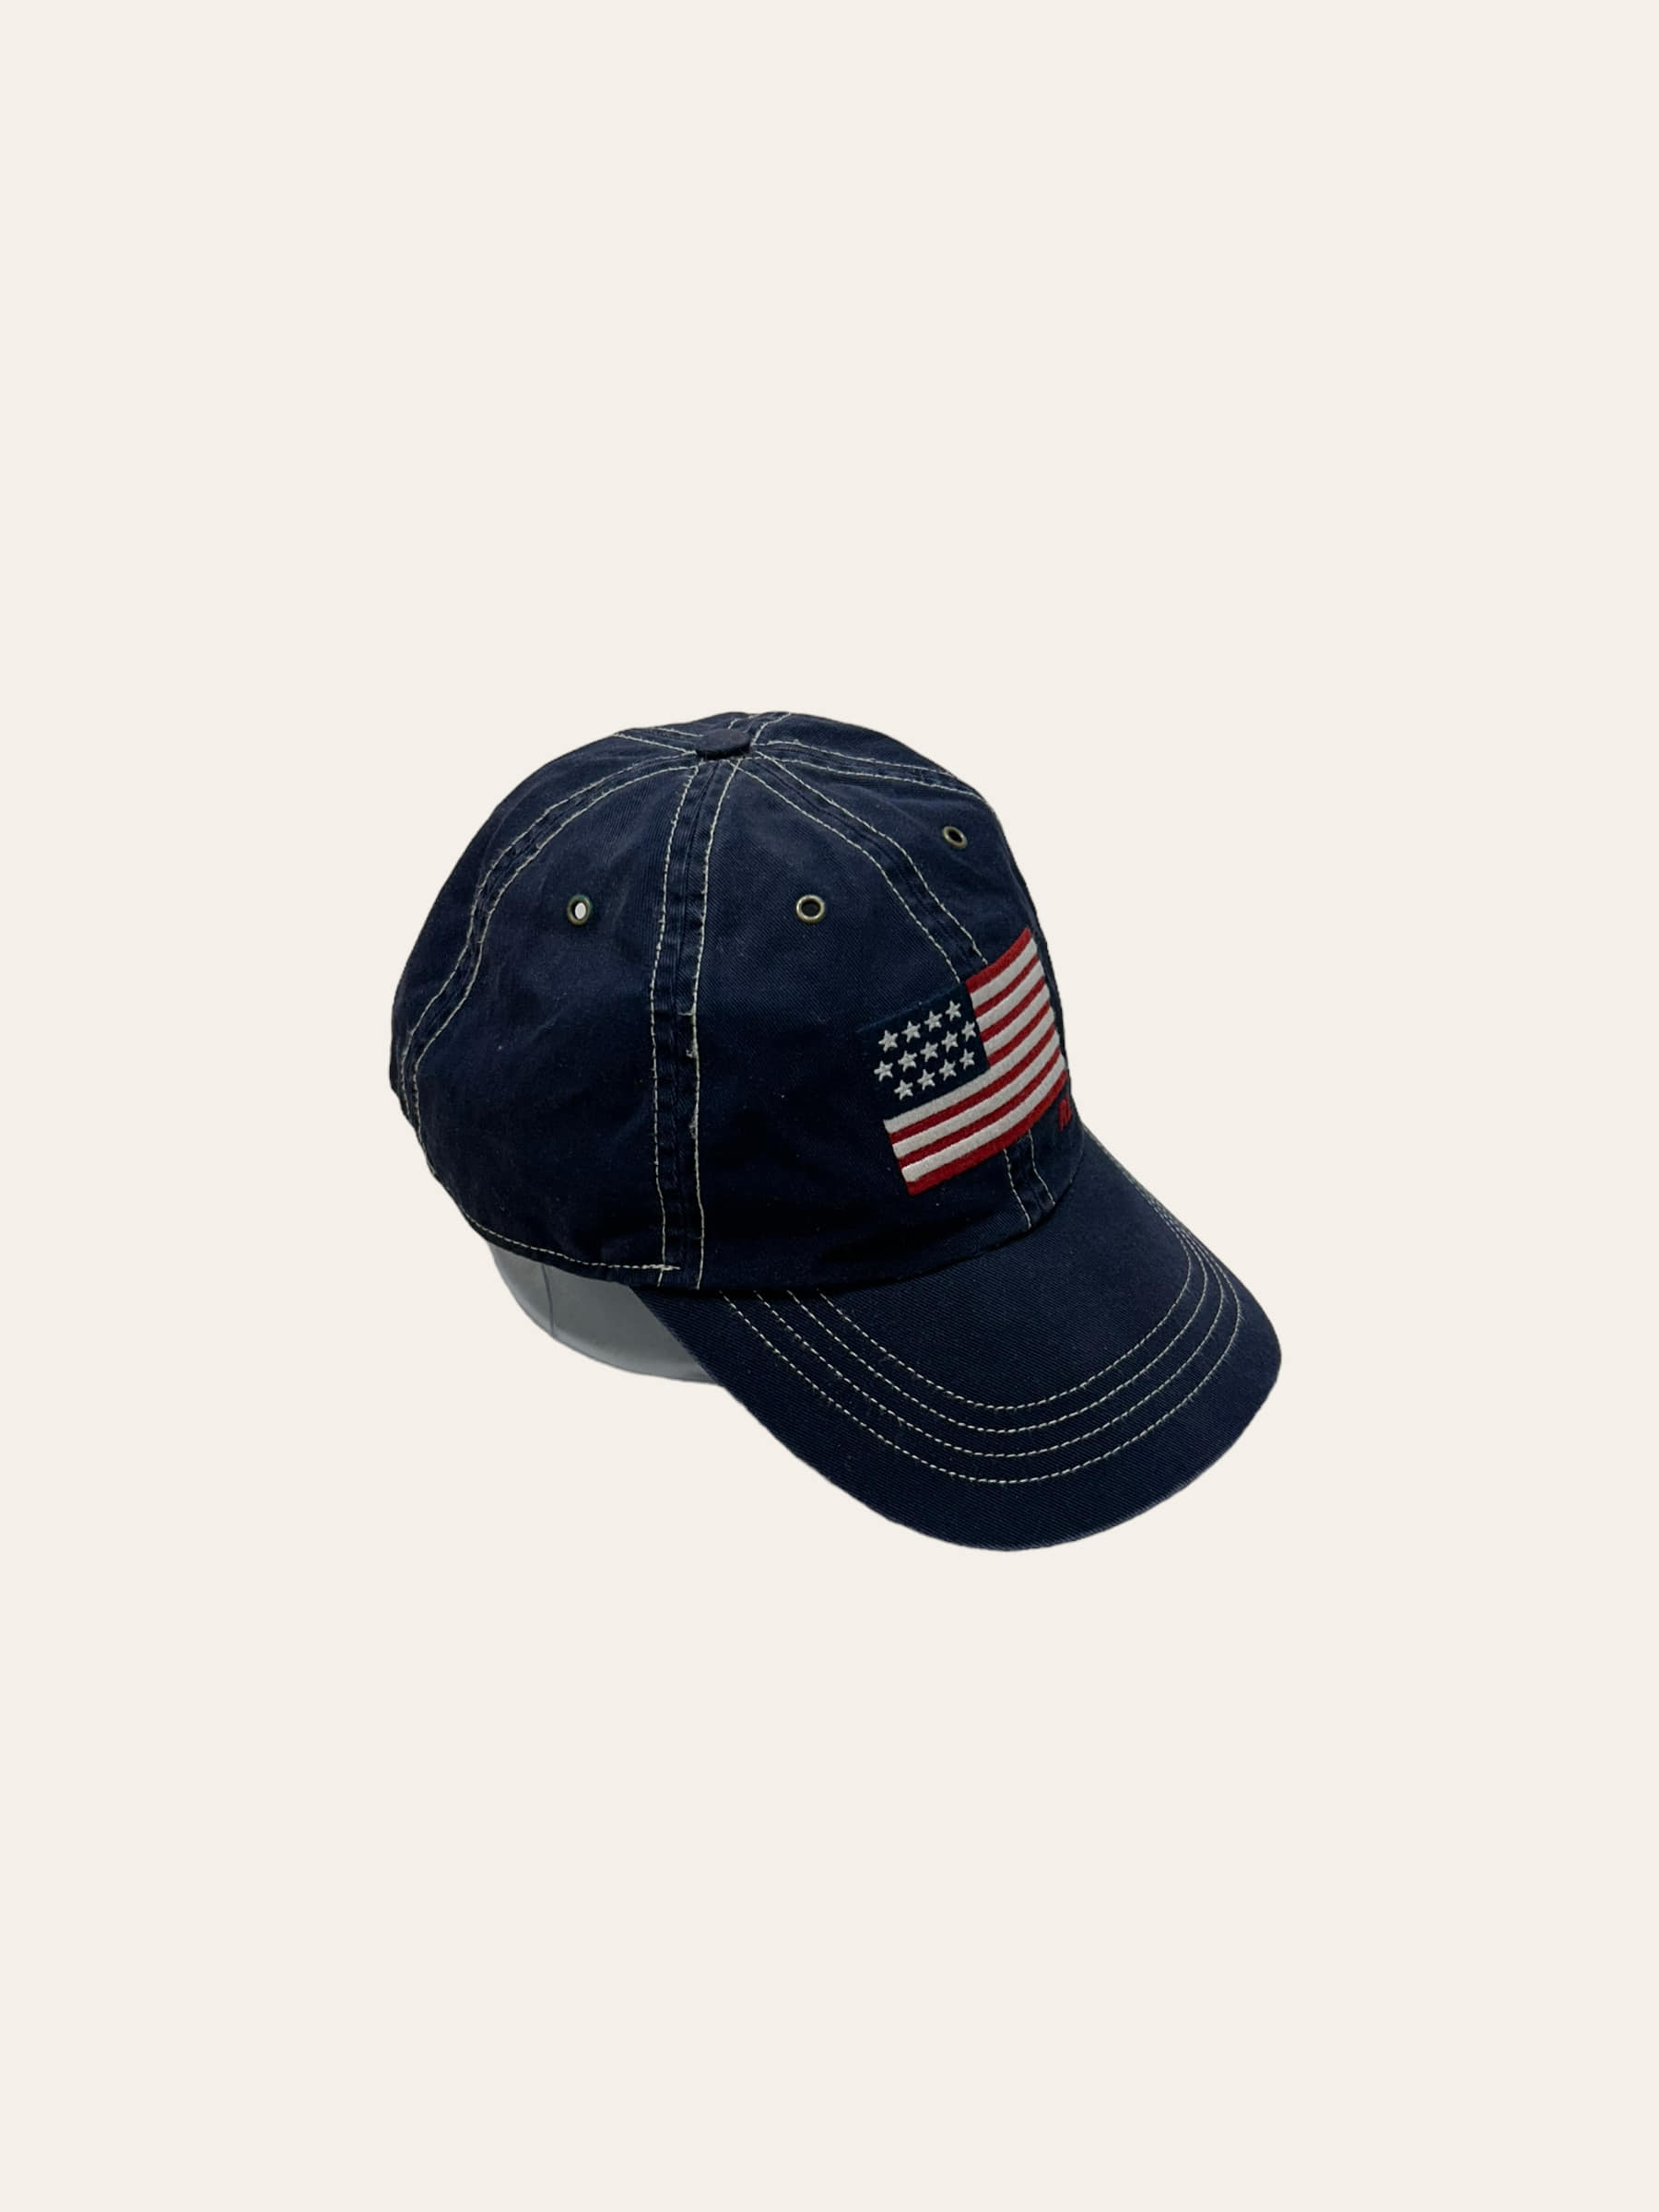 Polo ralph lauren dark navy USA flag cap